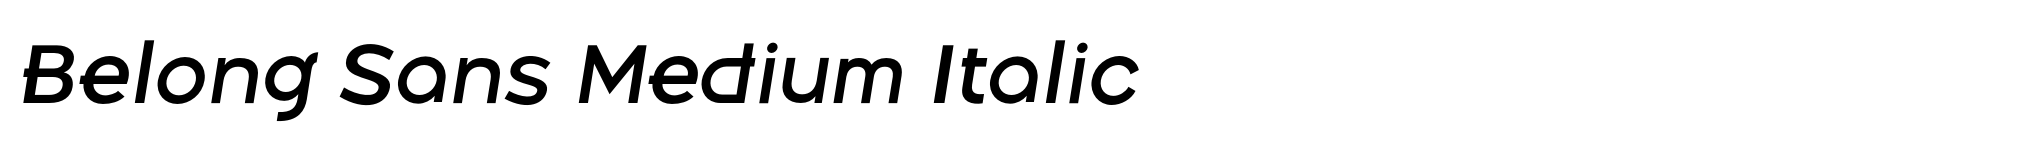 Belong Sans Medium Italic image